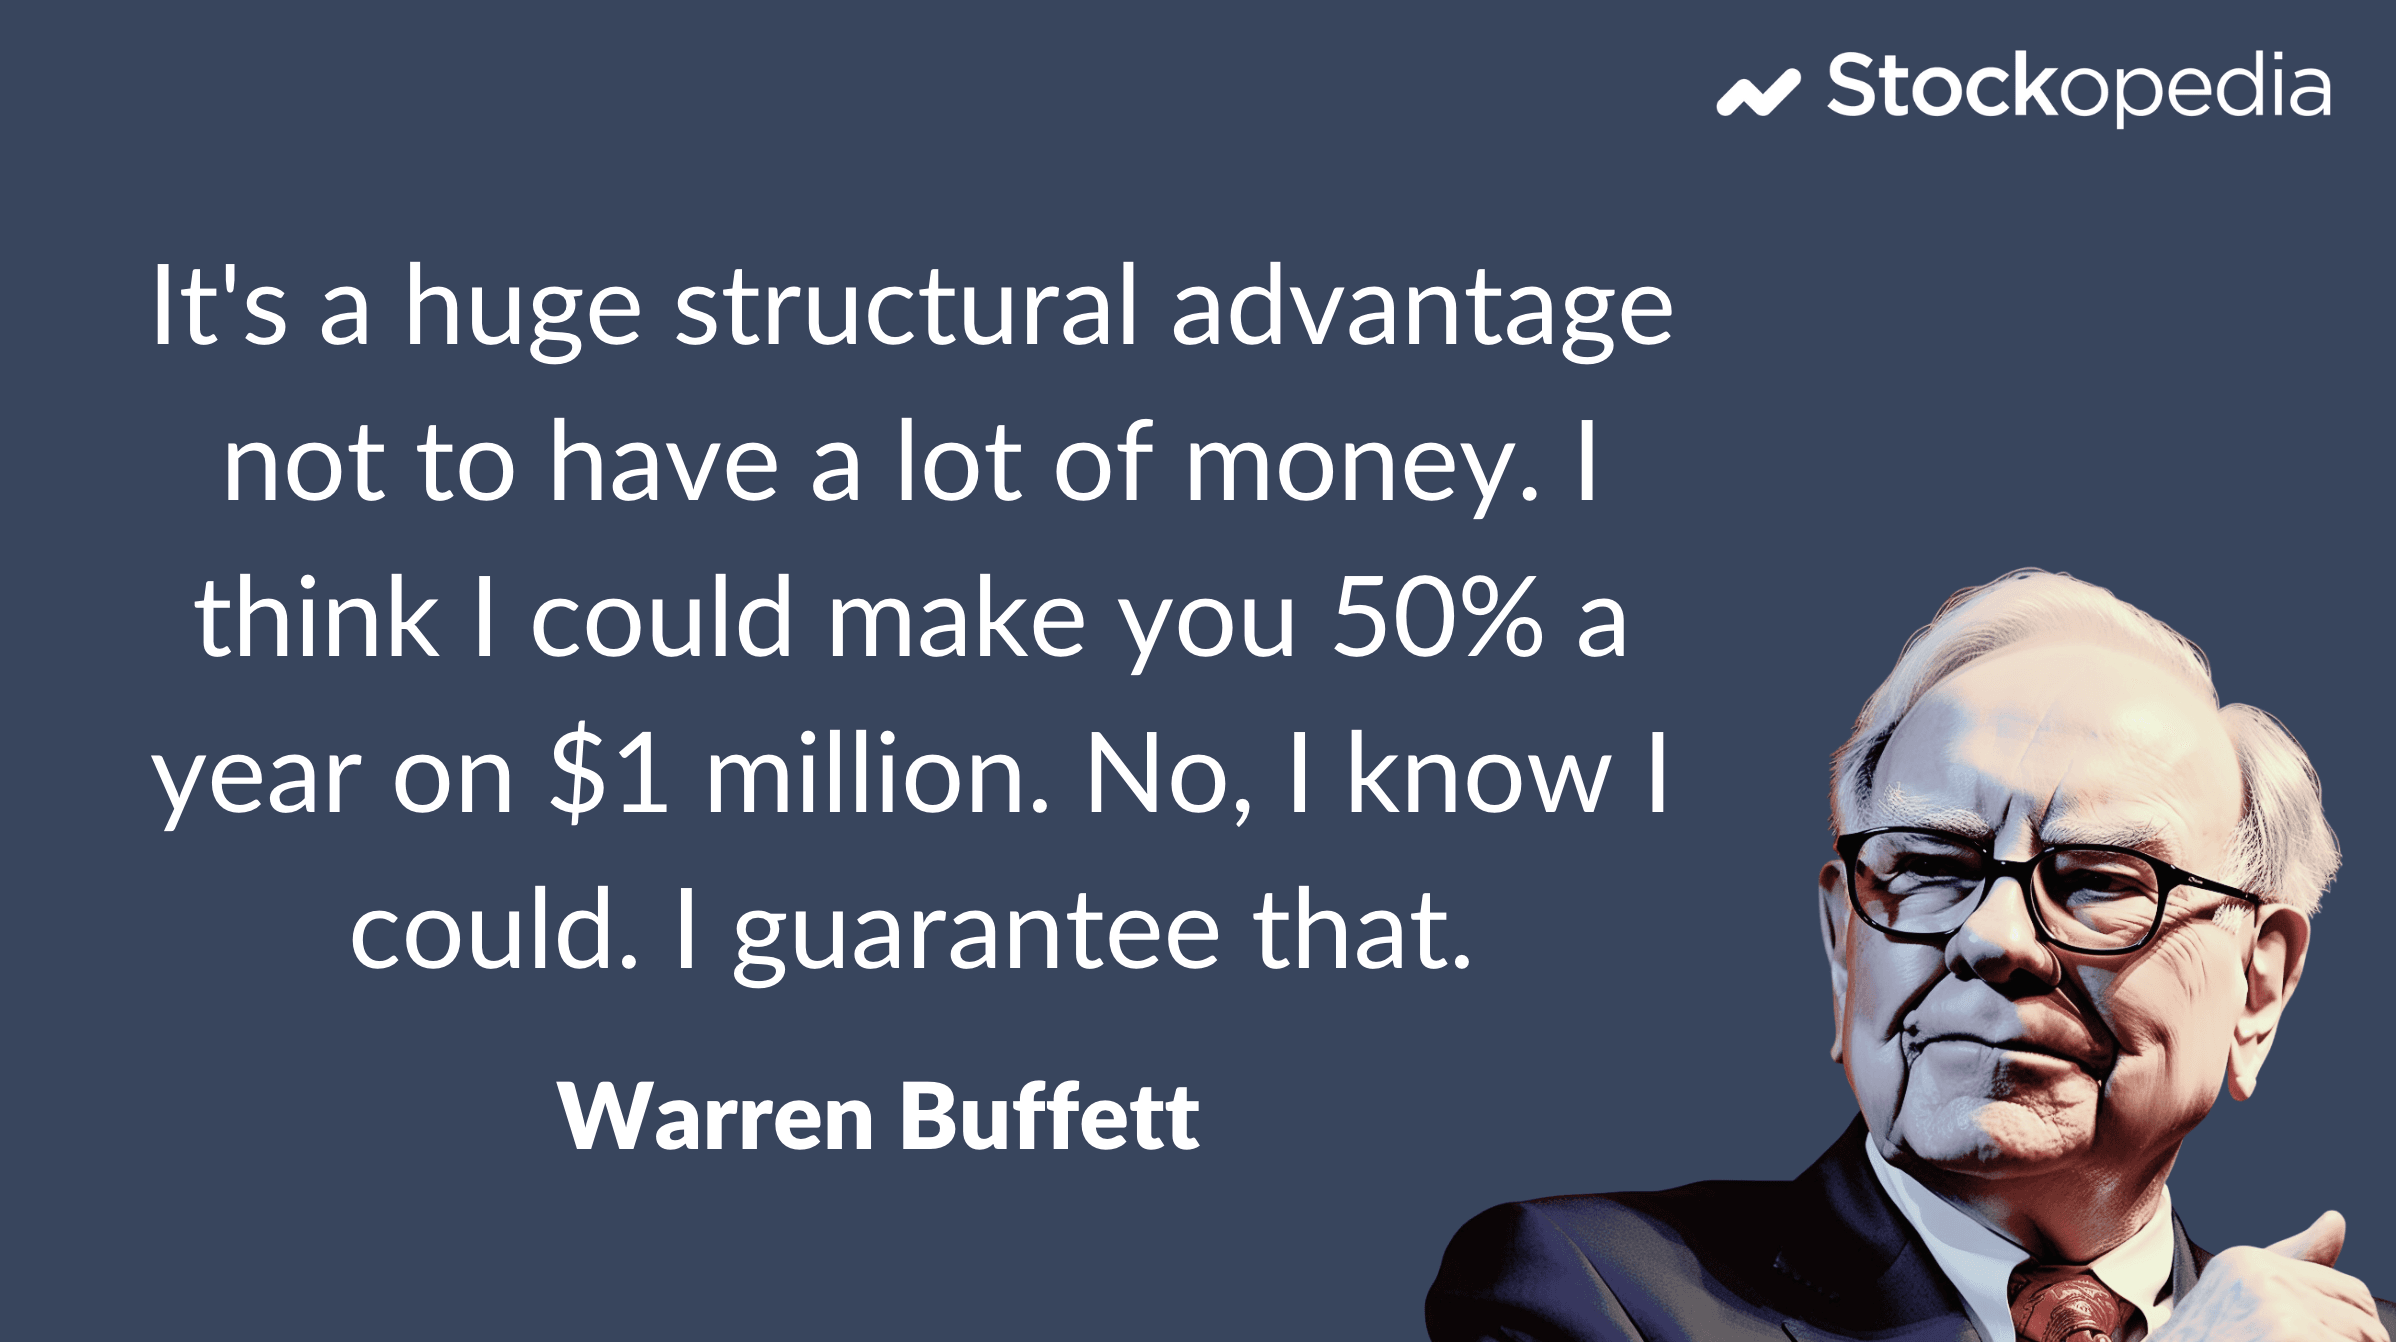 Quote - Buffett - 50% per year on $1m